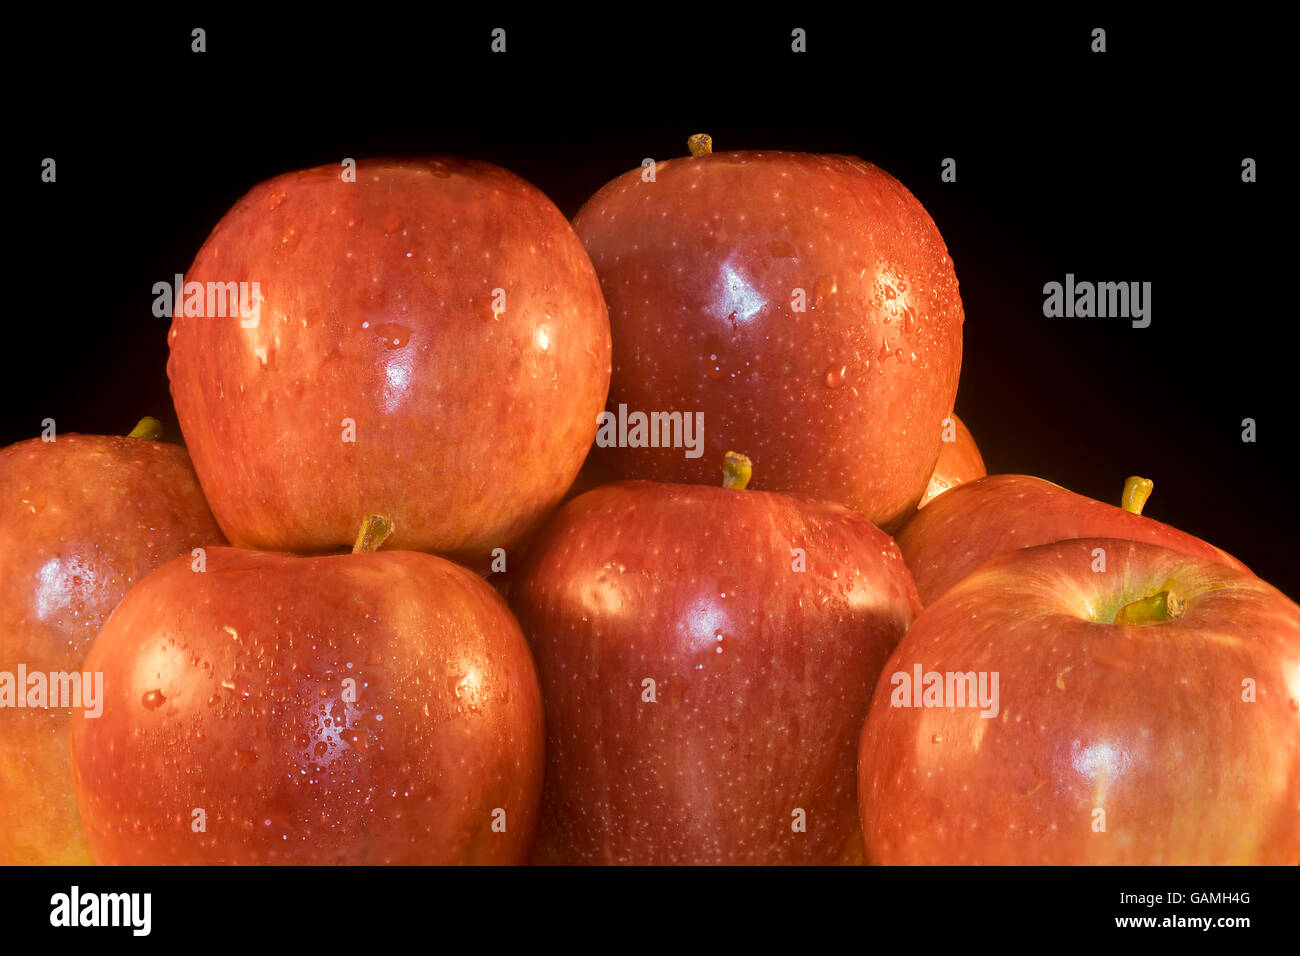 Fresh apples on black background. Stock Photo